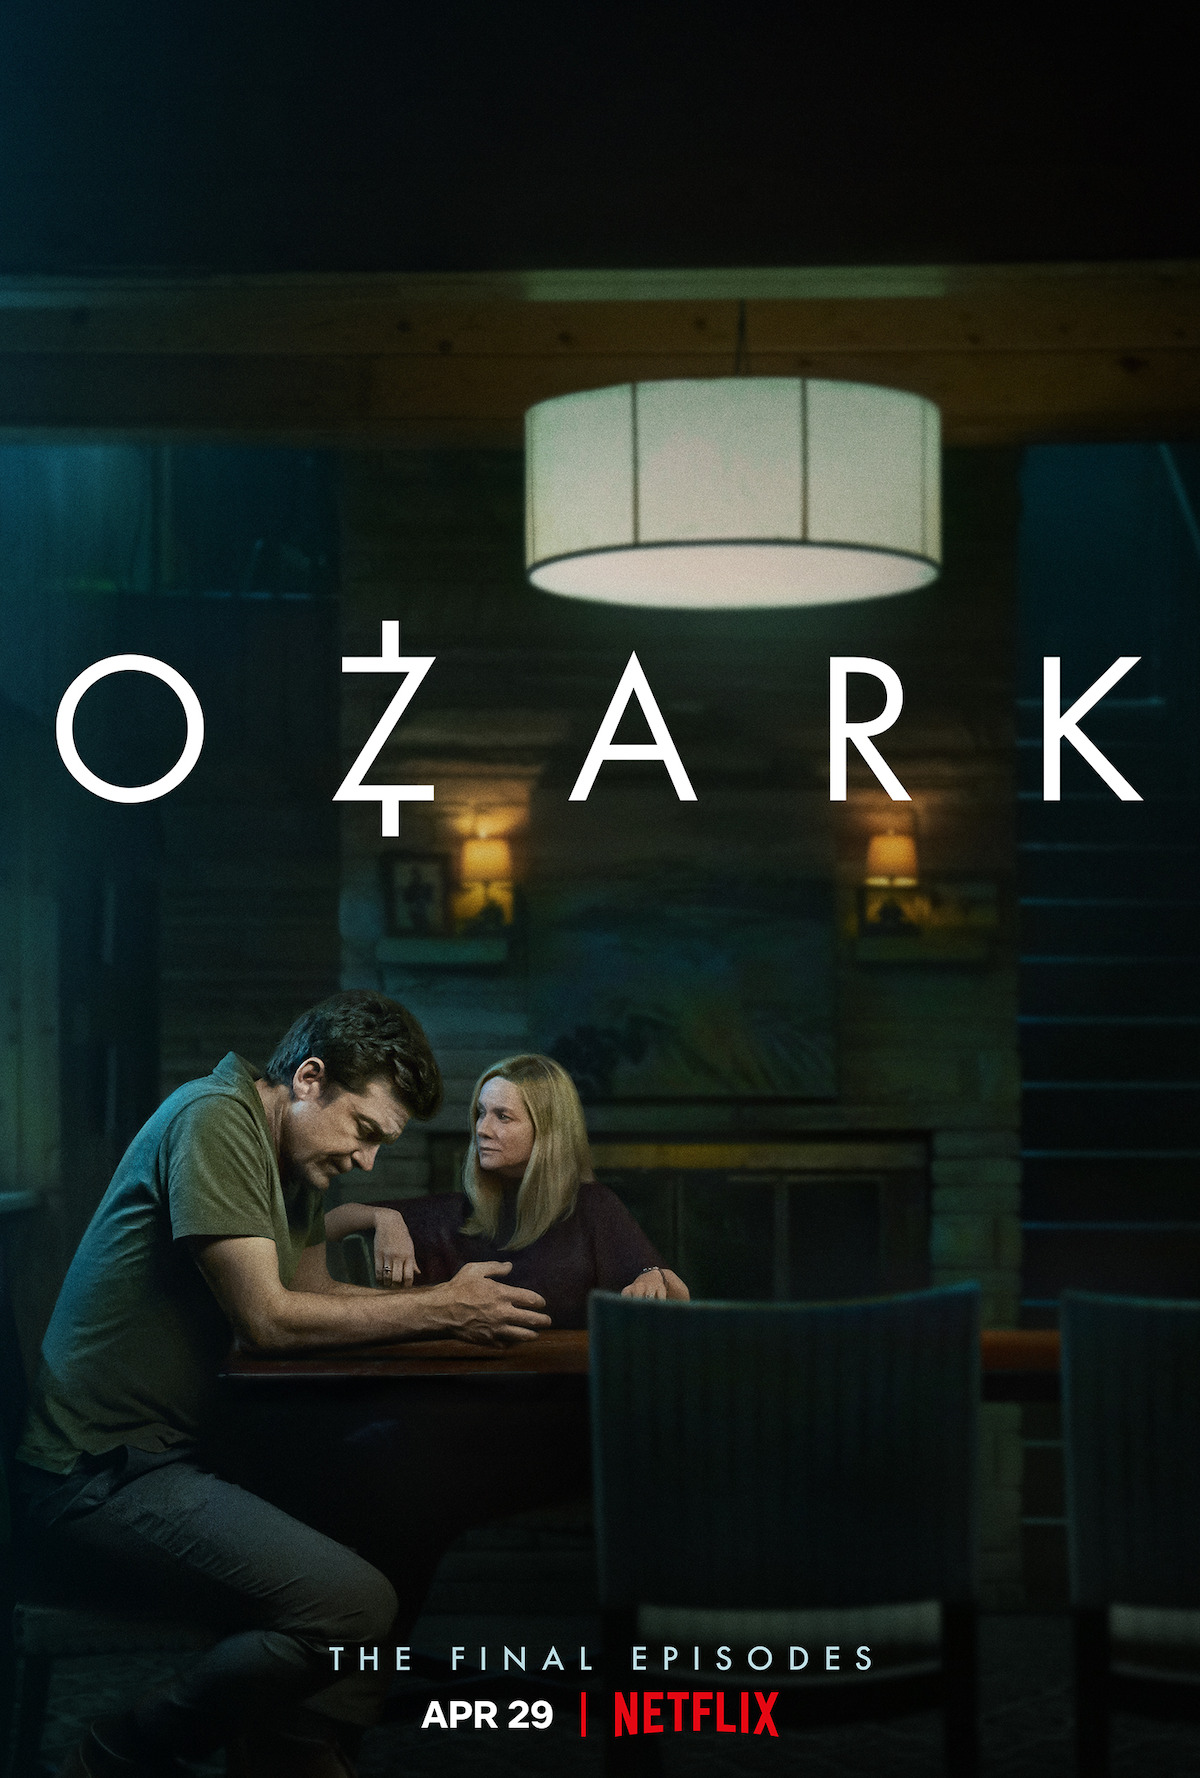 Ozark' Season 4 Part 2 Trailer: Watch - Netflix Tudum